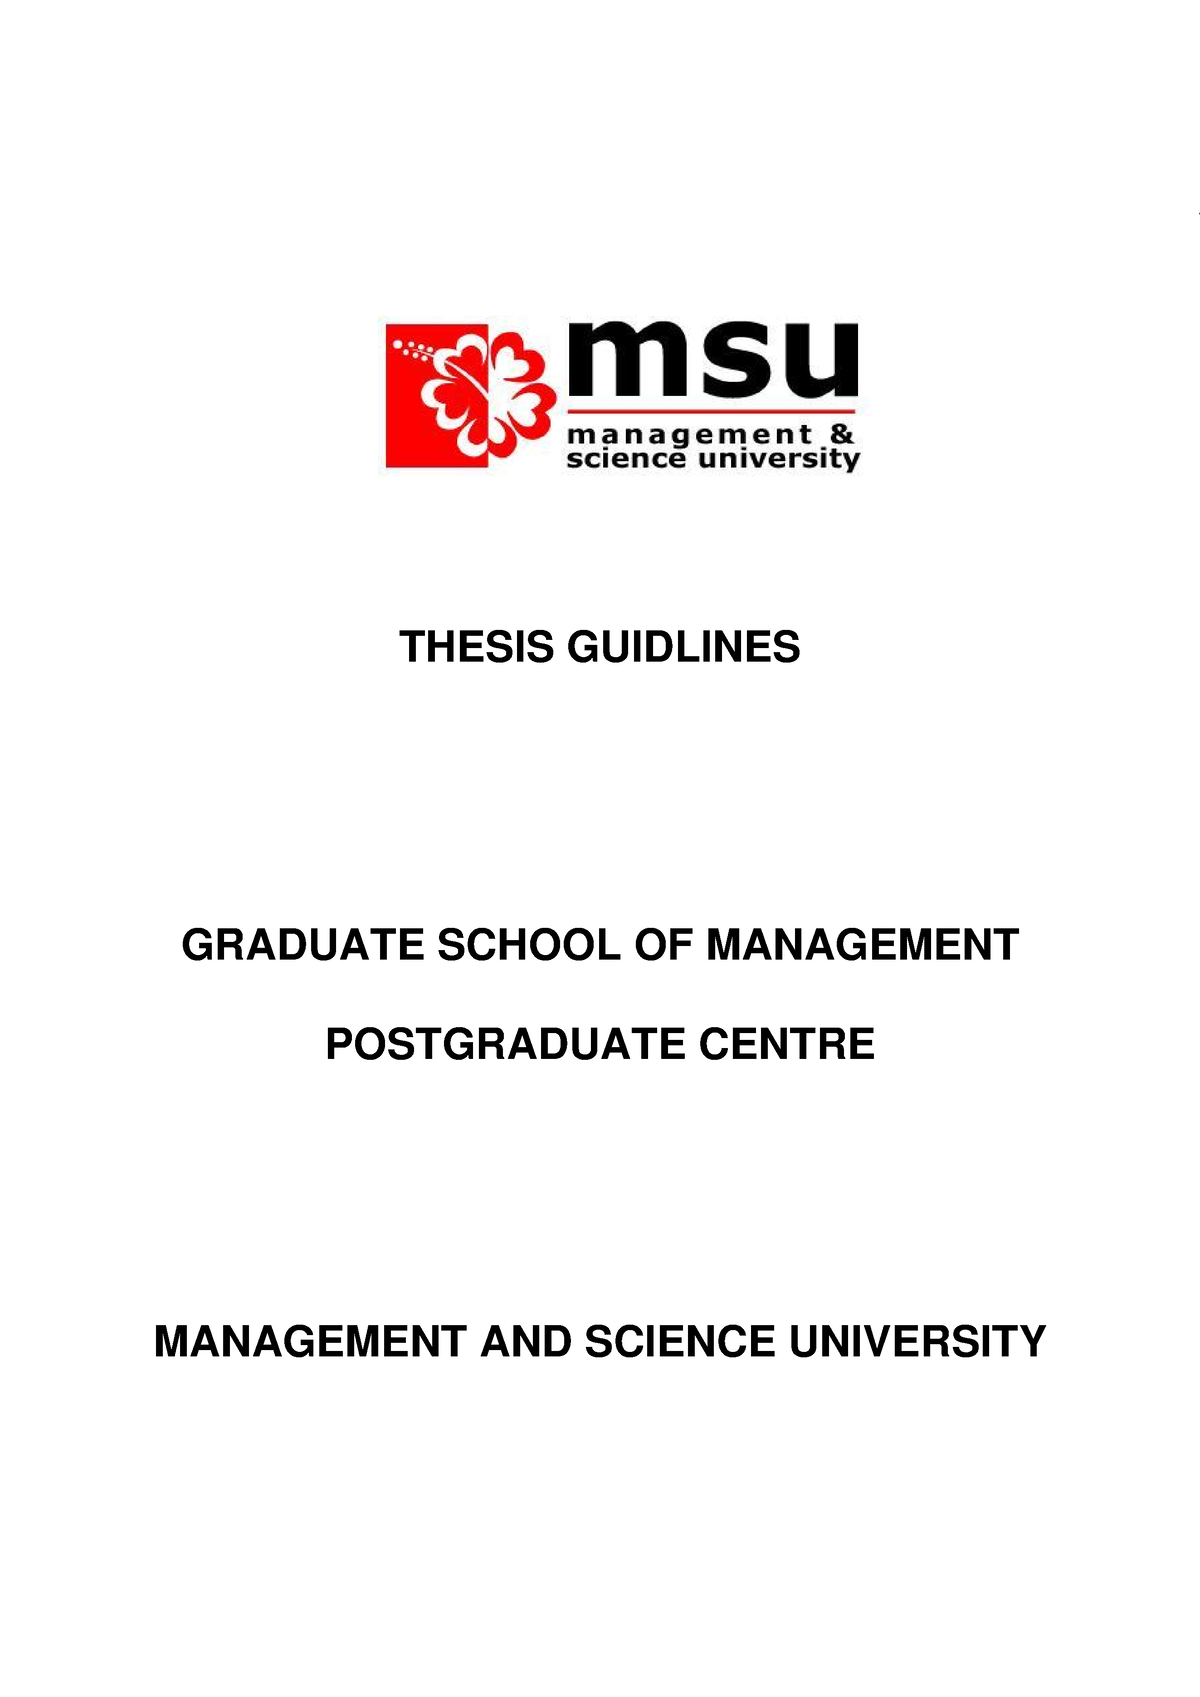 msu honors thesis